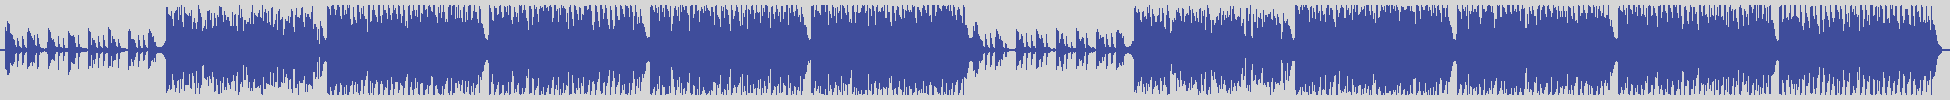 nf_boyz_records [NFY064] Paul Sutton - Keep Calm [99's Deep Street Mix] audio wave form